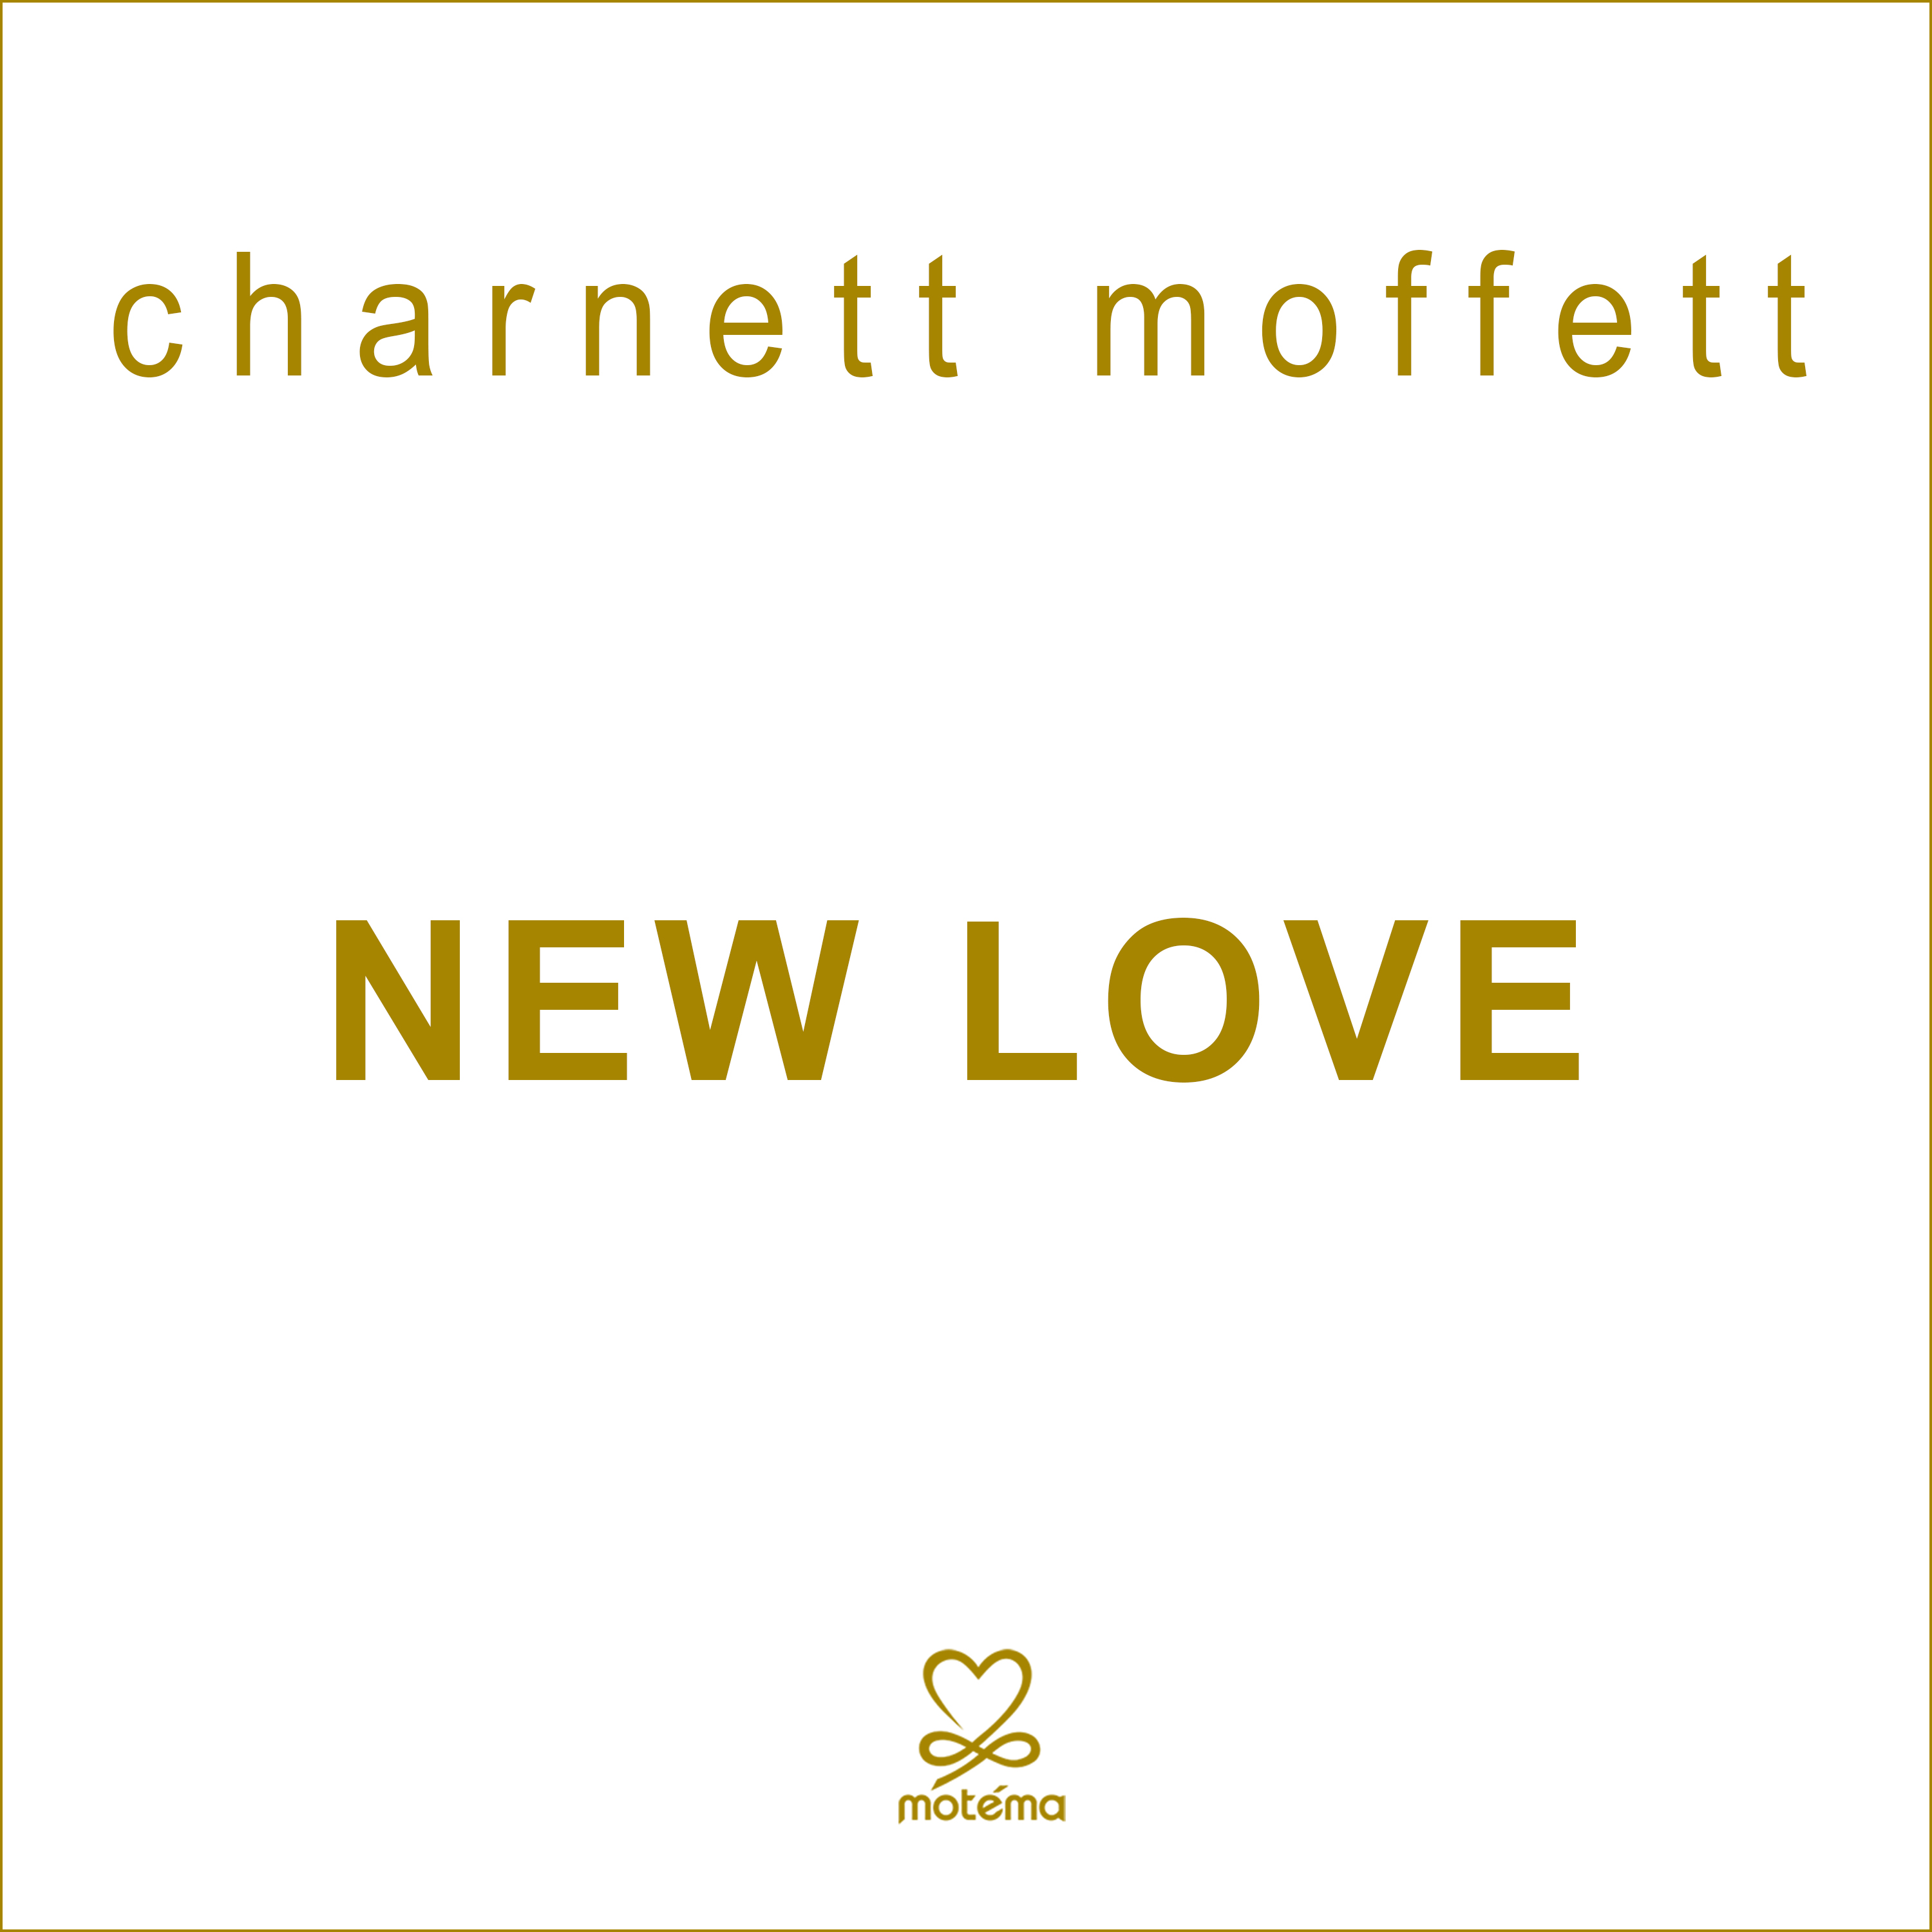 Charnett Moffett “New Love” single & album pre-order announced by Bass Magazine